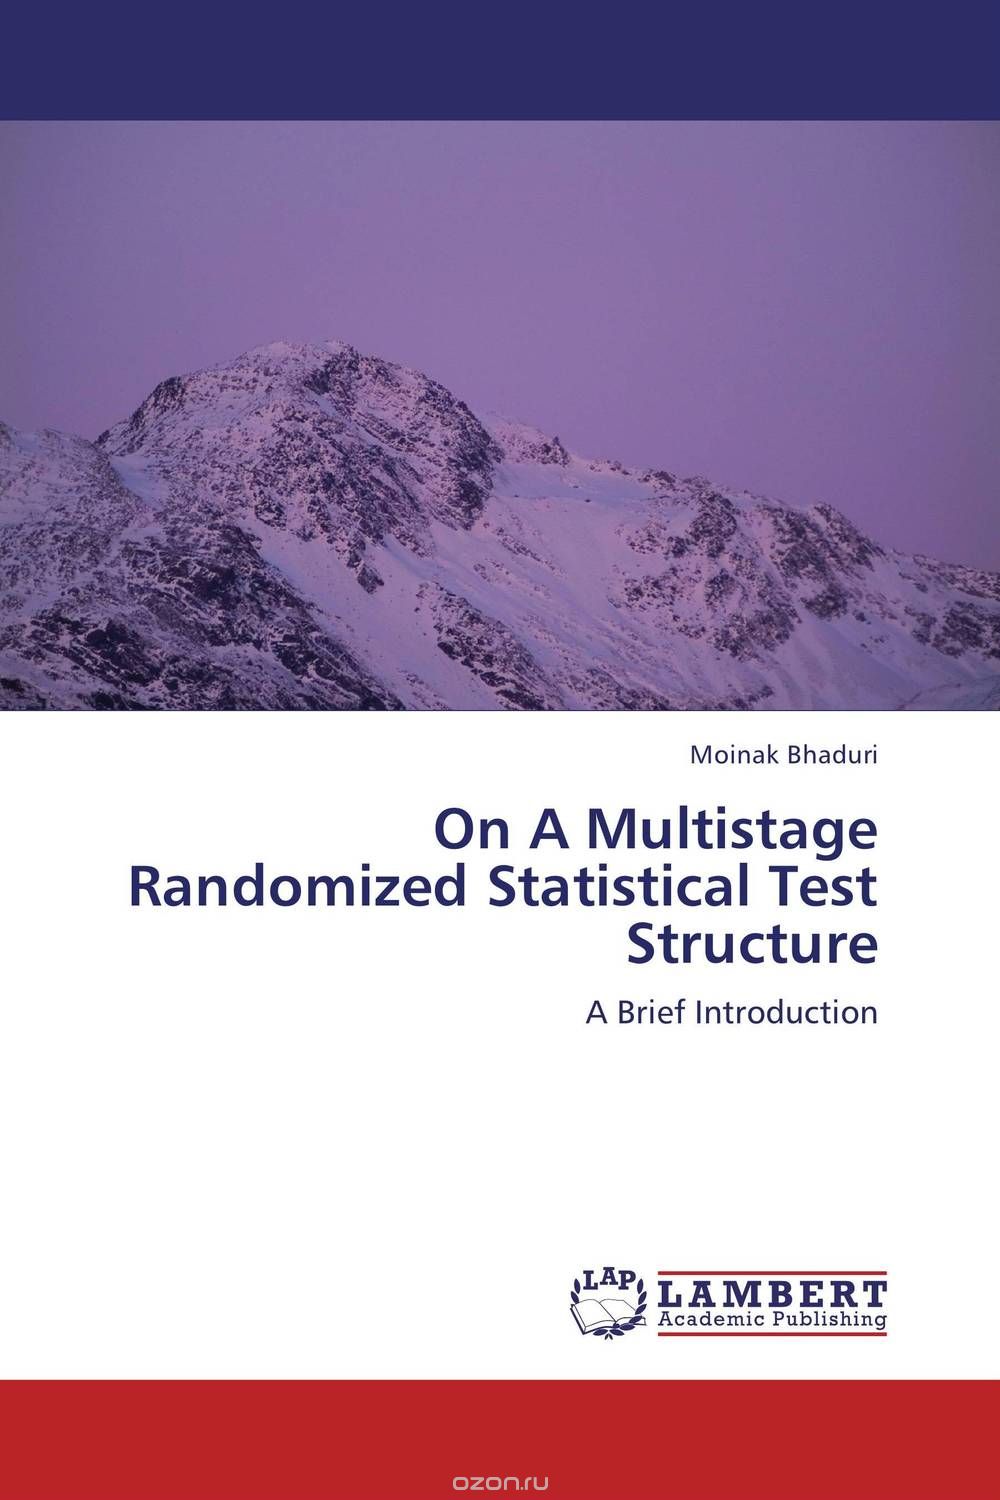 Скачать книгу "On A Multistage Randomized Statistical Test Structure"